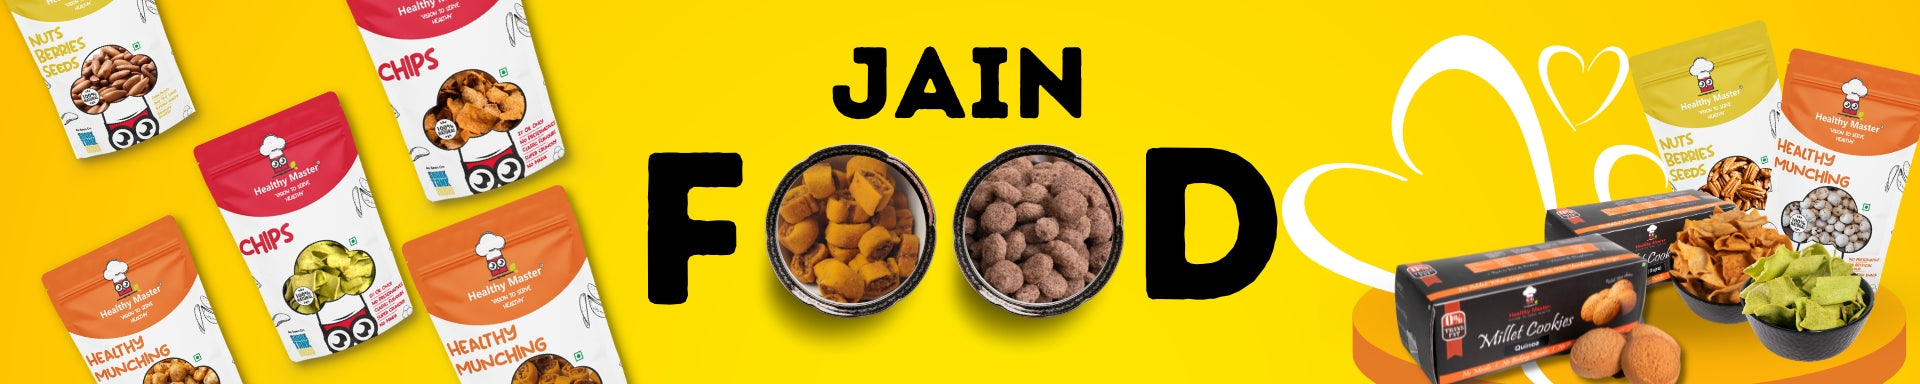 Jain Food